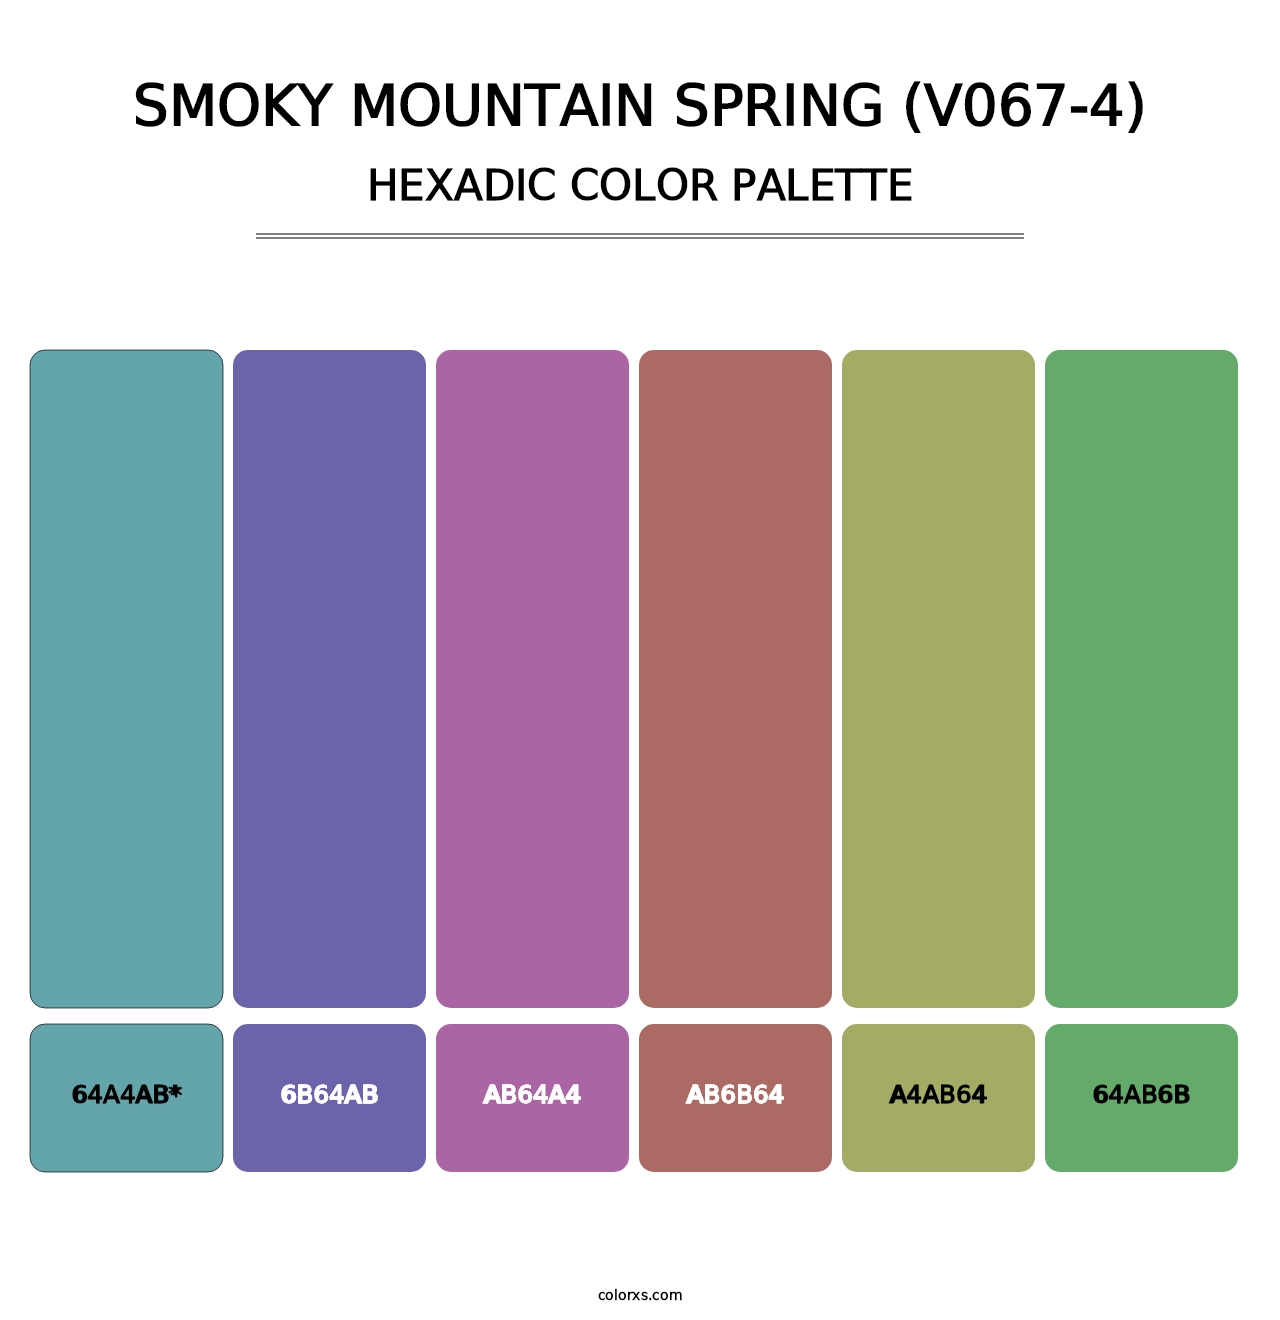 Smoky Mountain Spring (V067-4) - Hexadic Color Palette